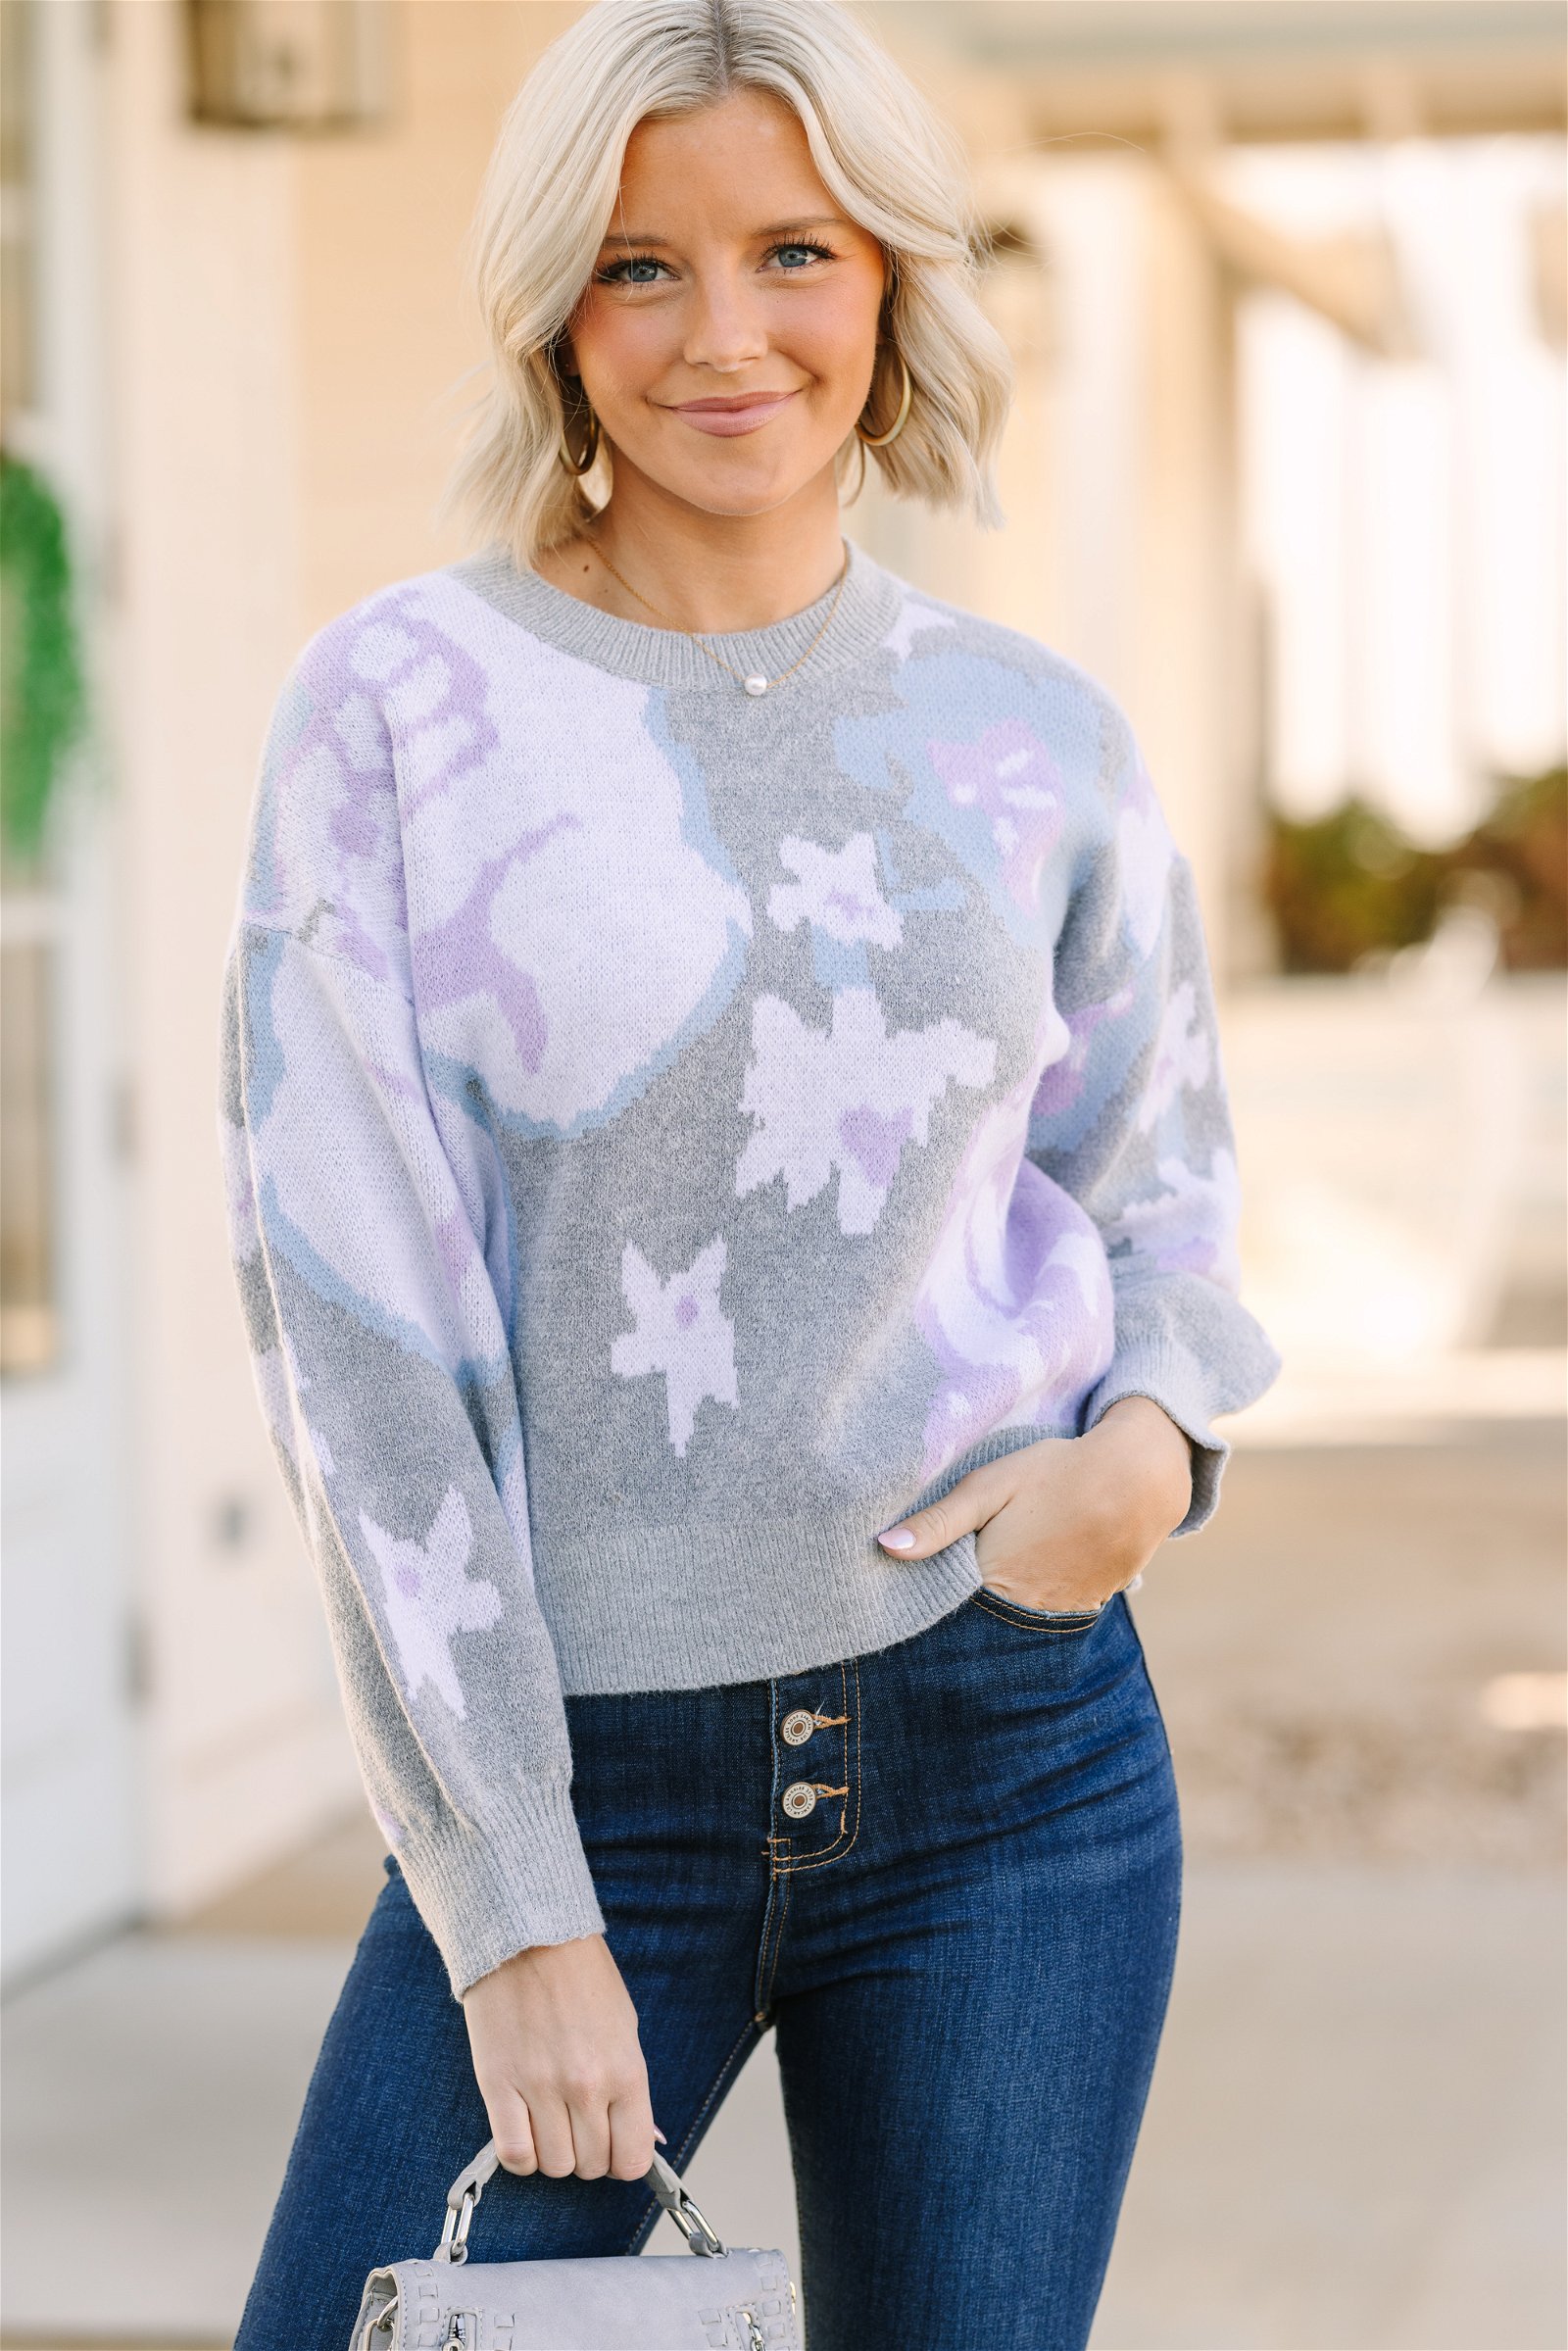 Chic Pursuits Blue Floral Sweater